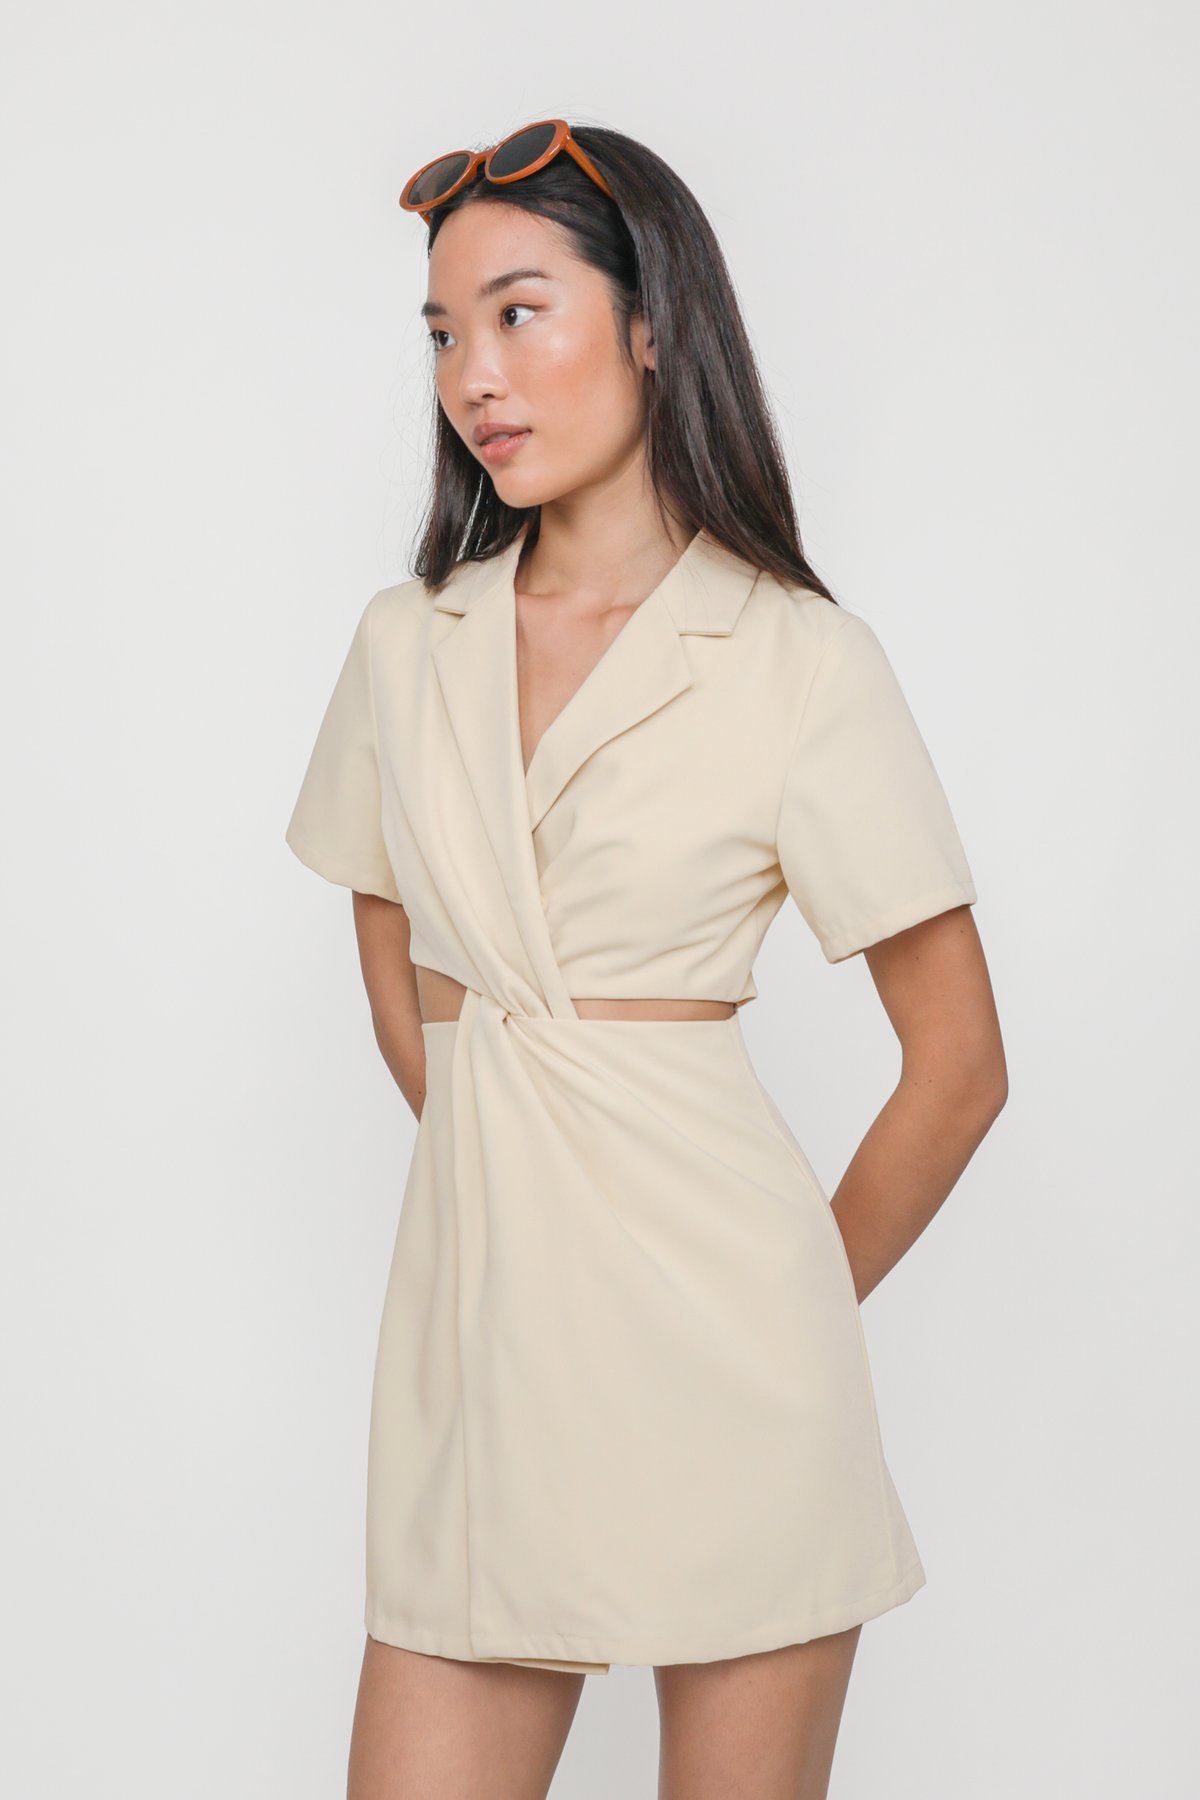 Kye Twist Front Cutout Dress (Cream)